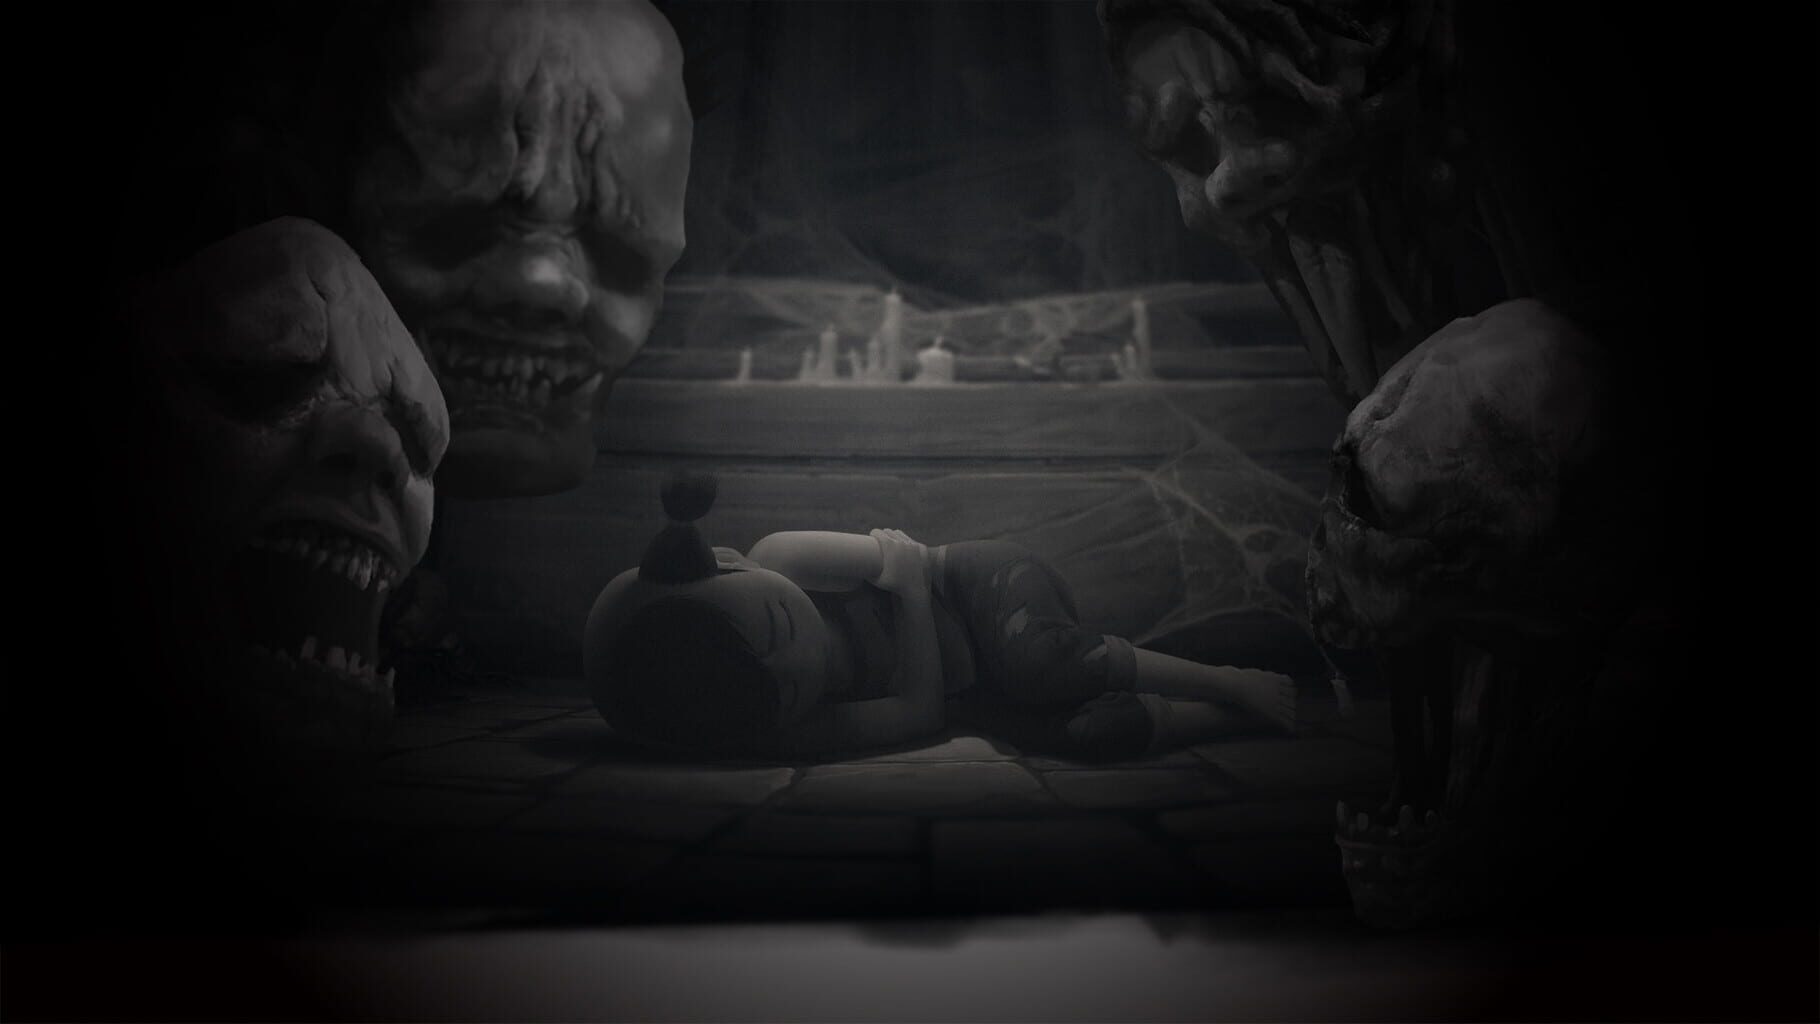 Eastern Exorcist screenshots